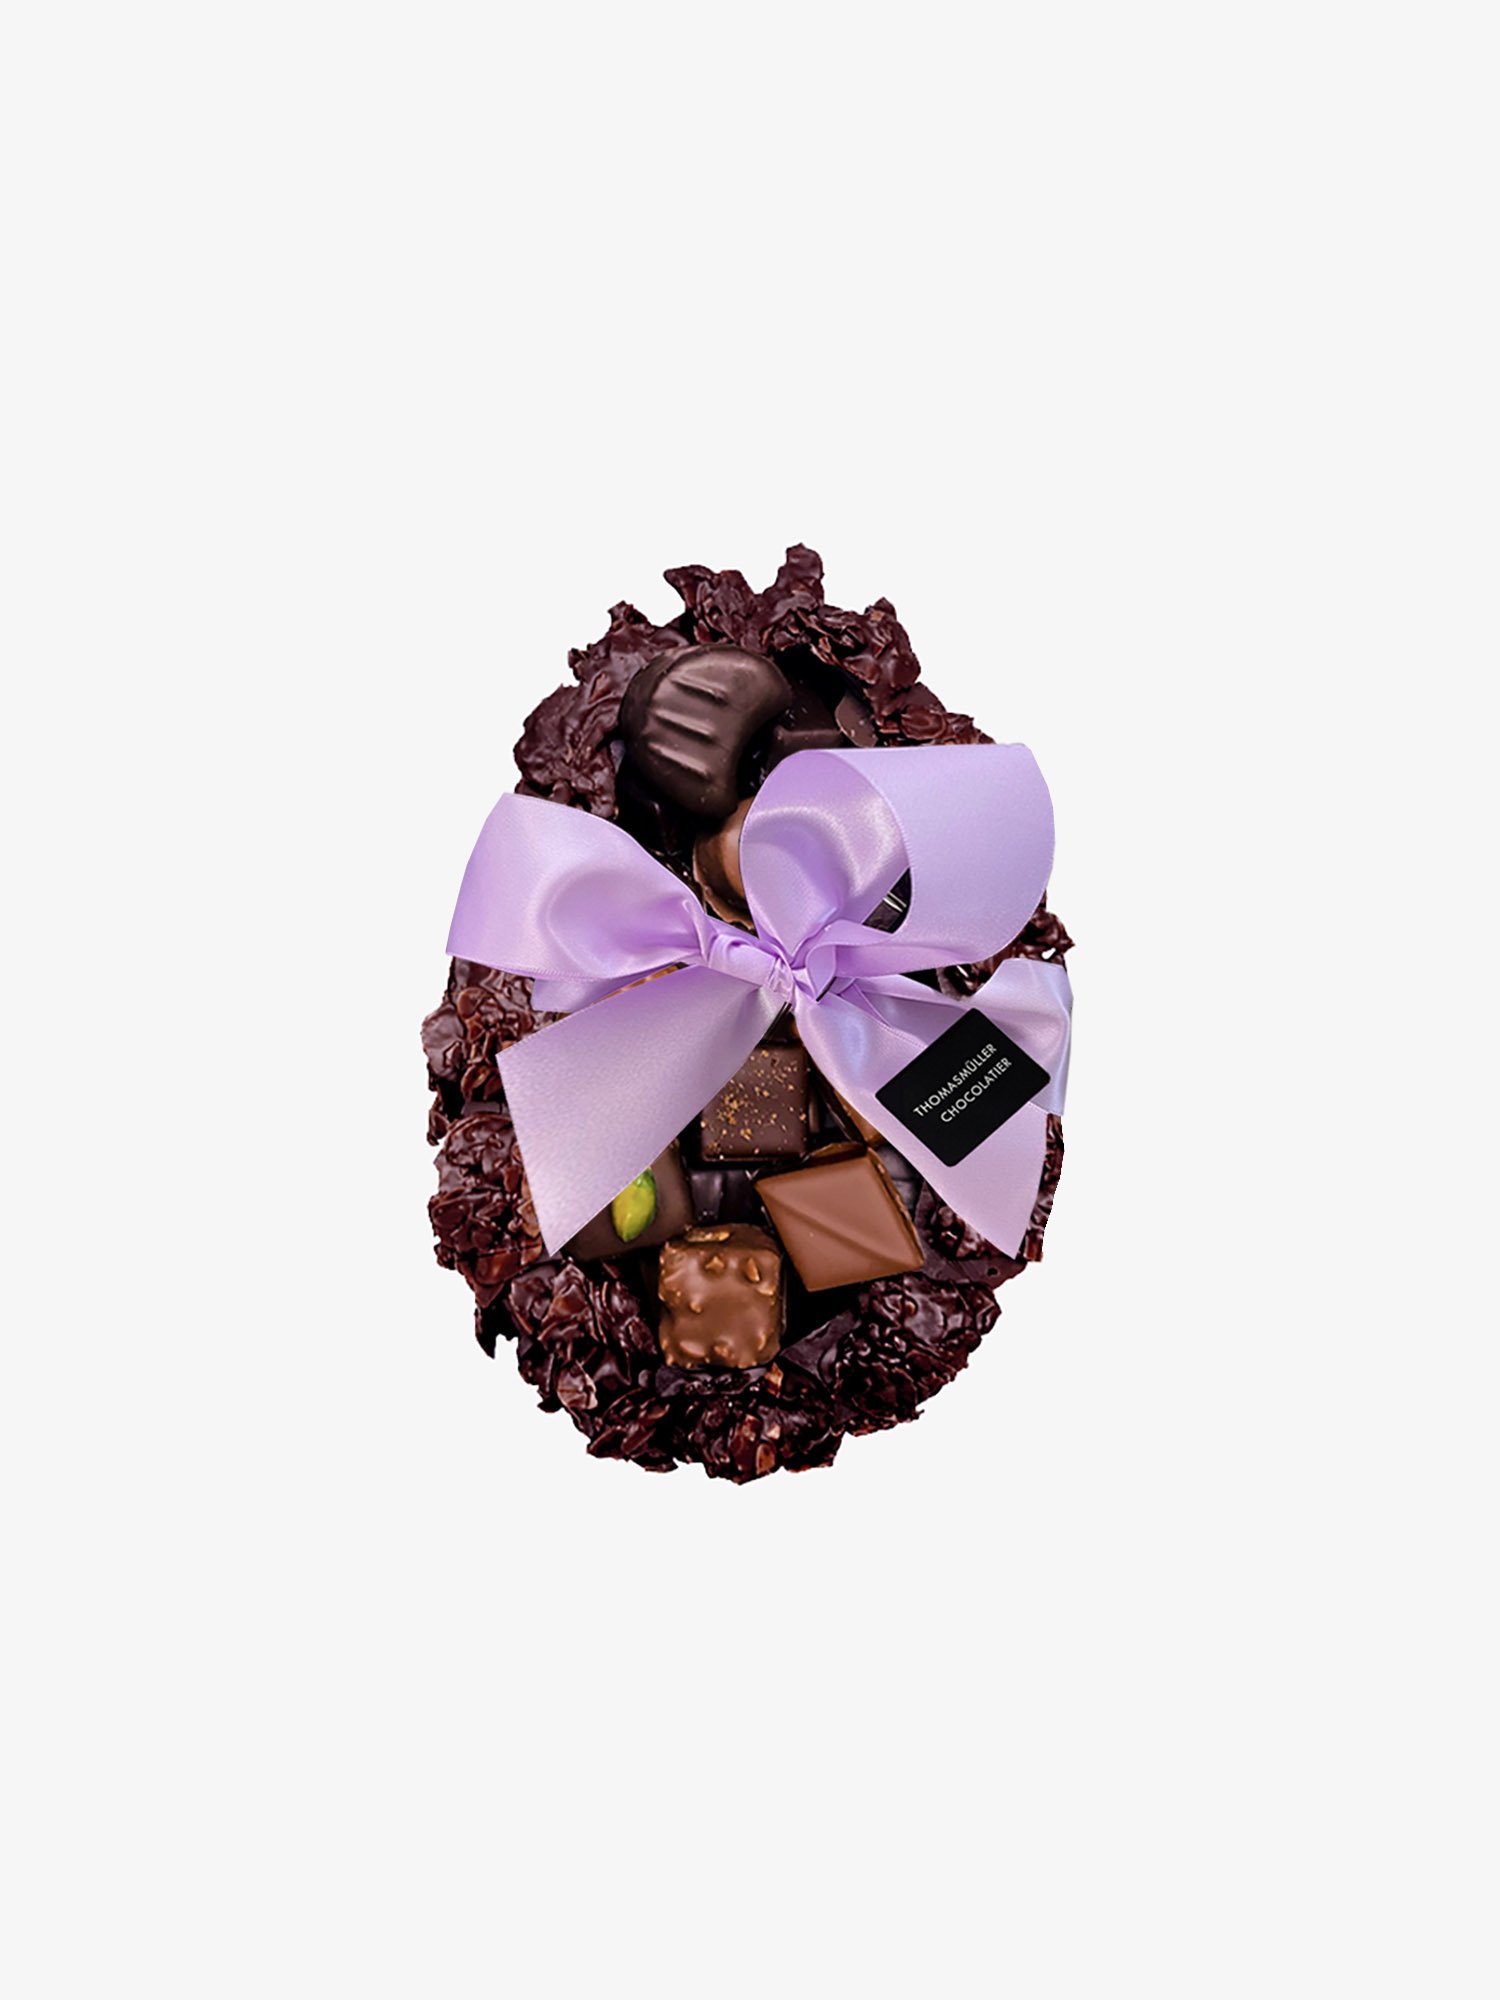 Buy Rocher Chocolate Easter Eggs online - Chocolatier Thomas Müller